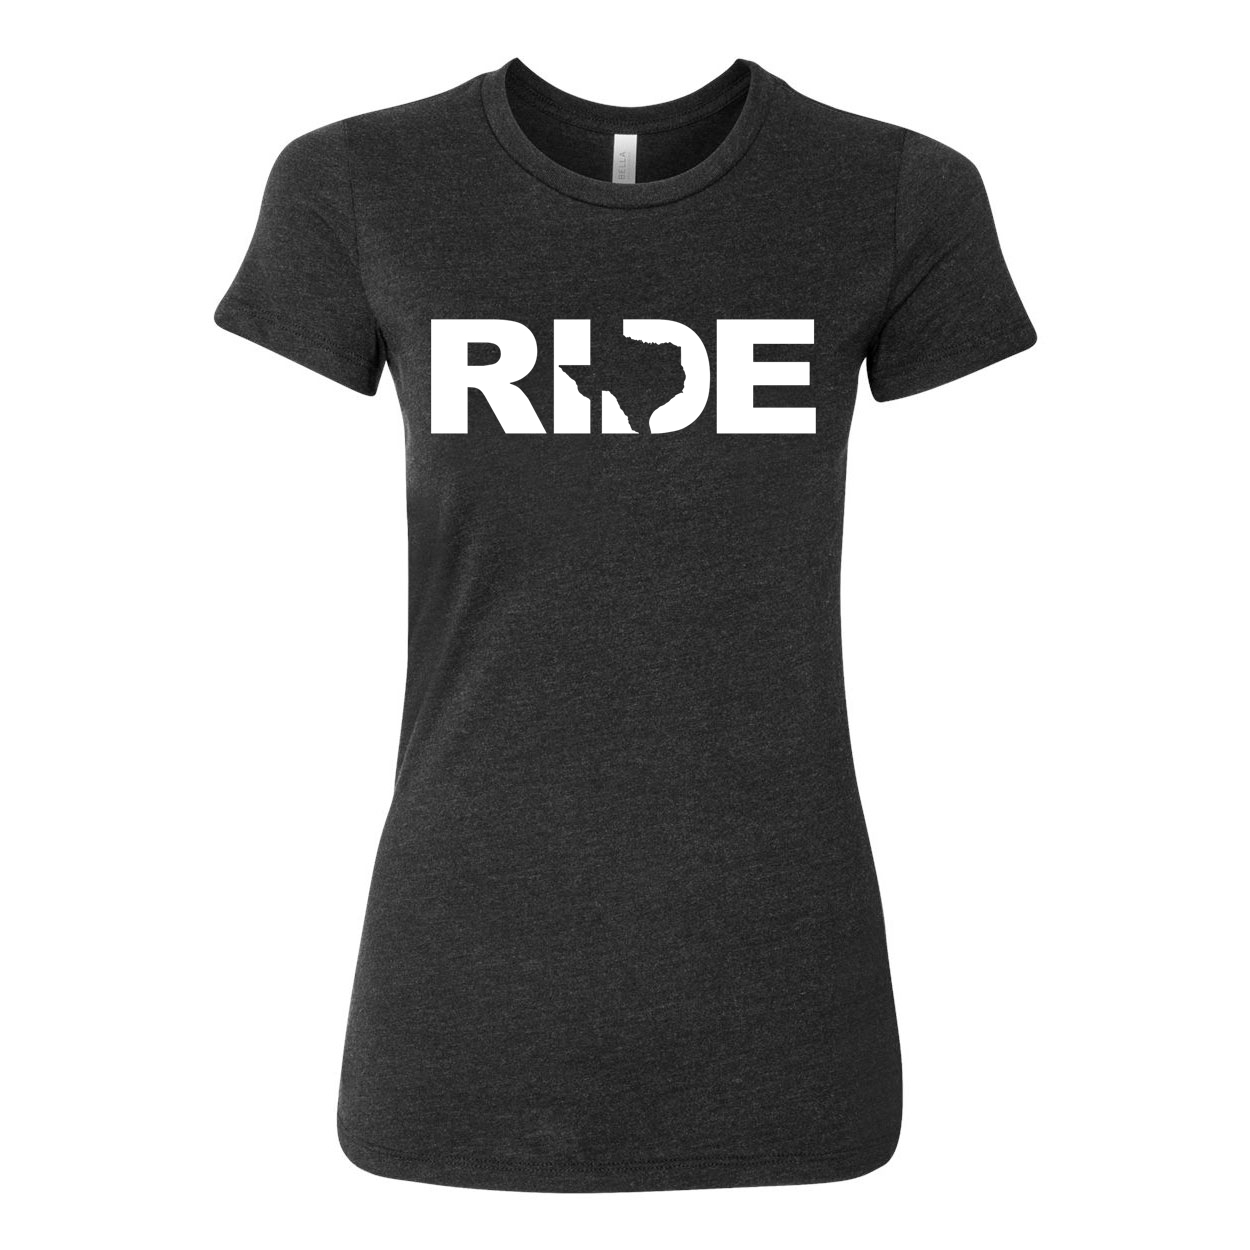 Ride Texas Classic Womens Fitted T-Shirt Dark Heather Gray (White Logo)